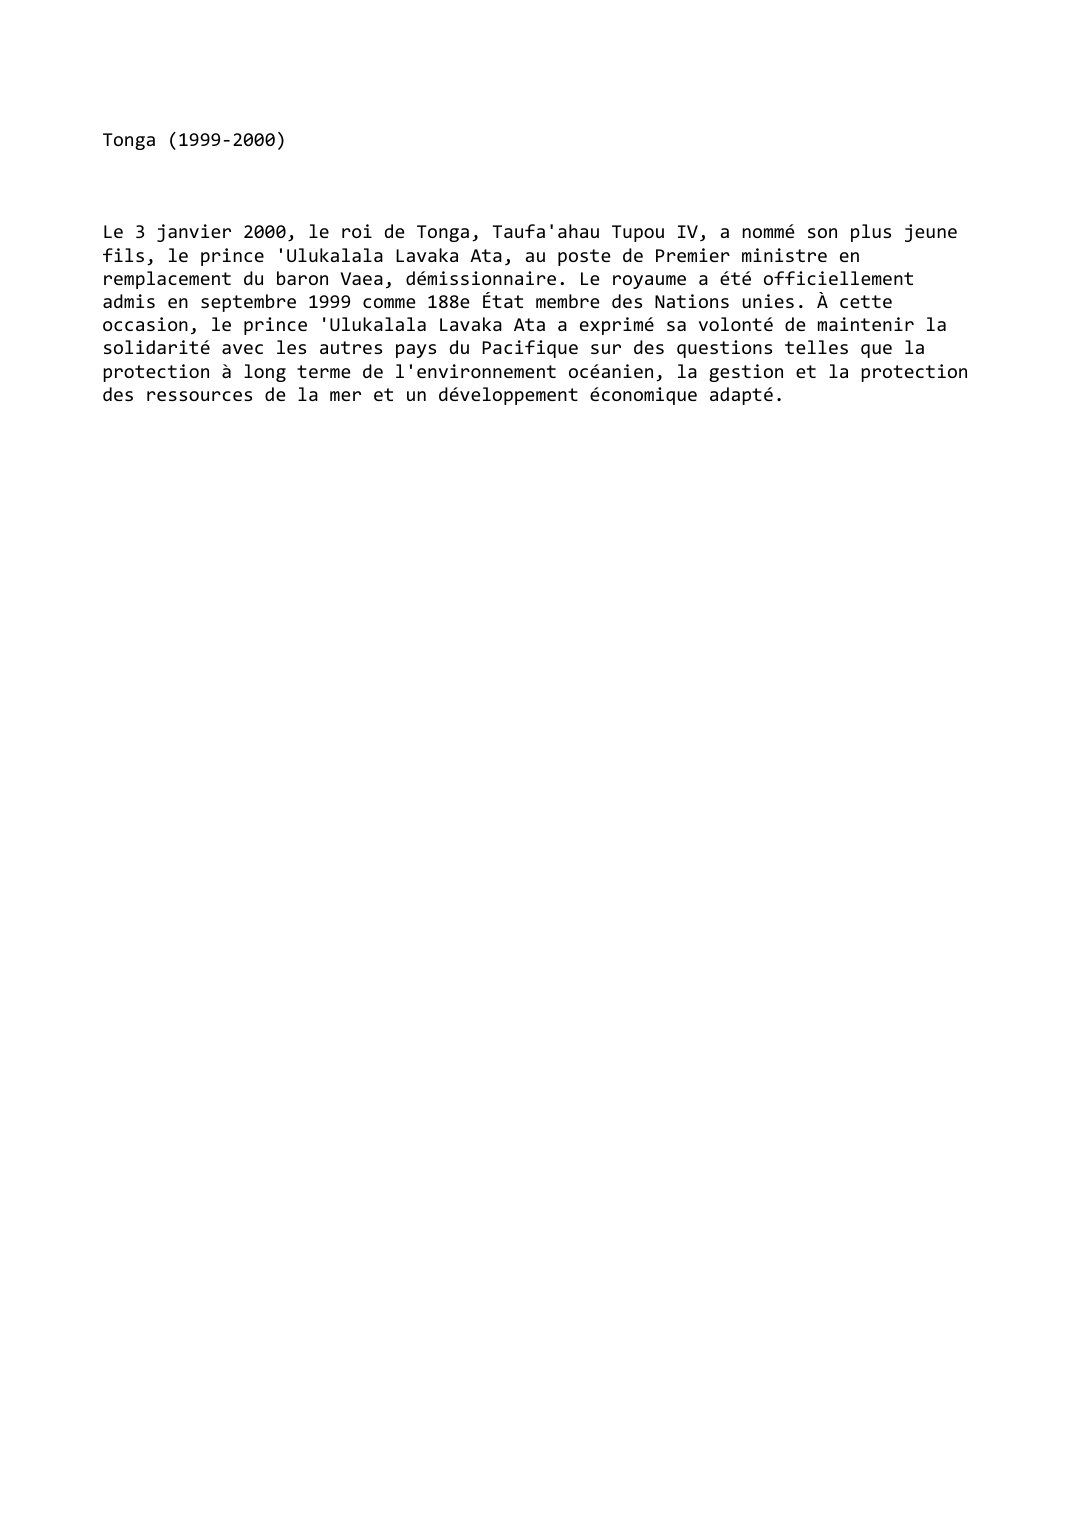 Prévisualisation du document Tonga (1999-2000)